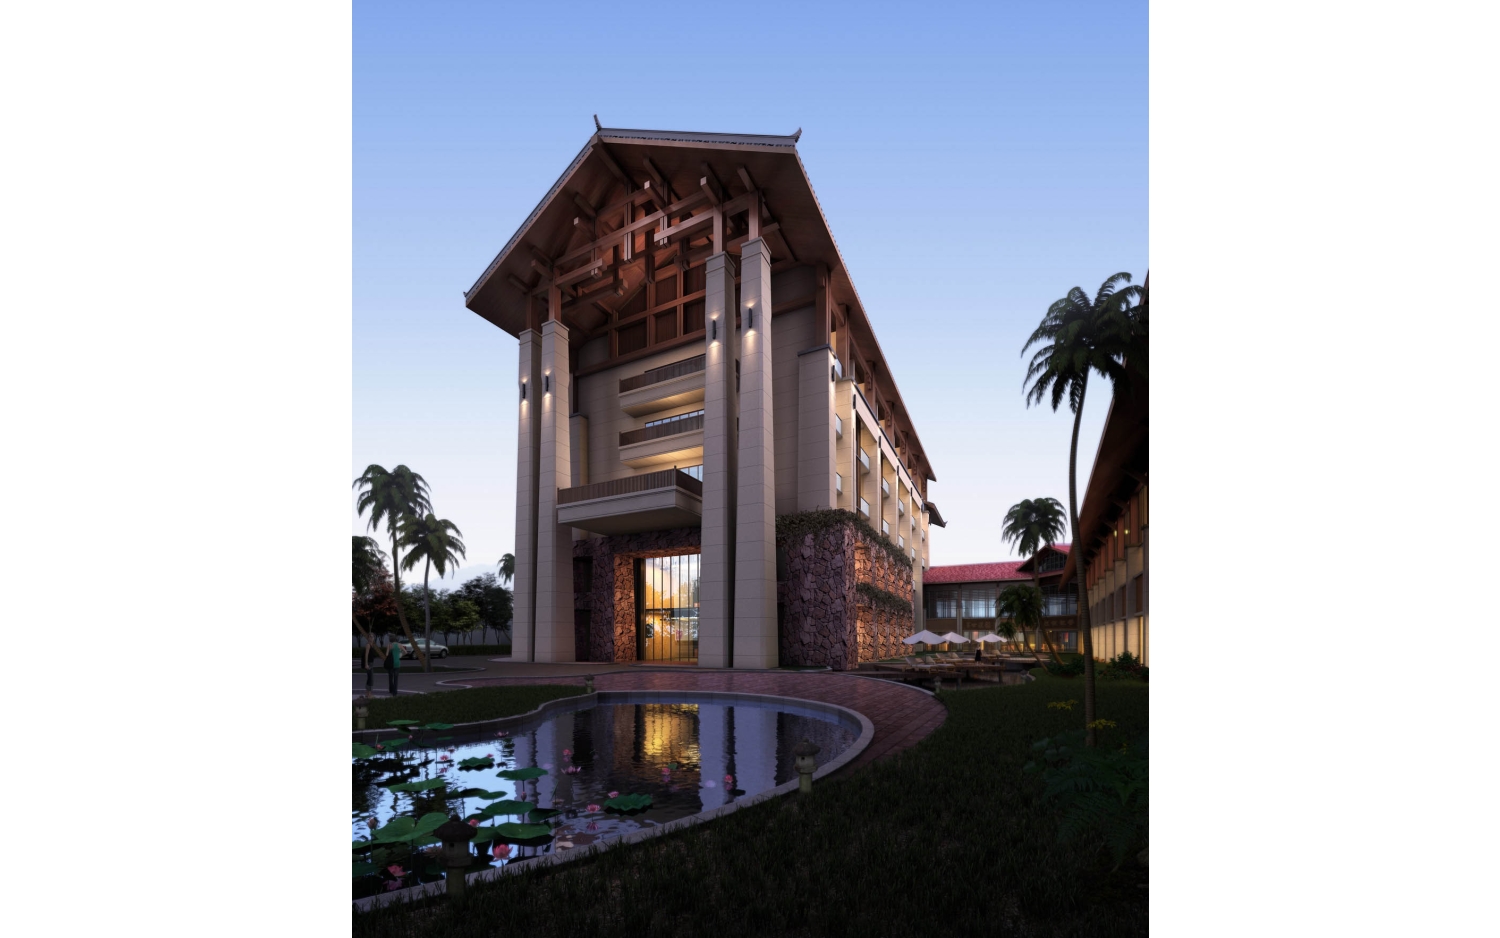 Resort/hotel building rendering